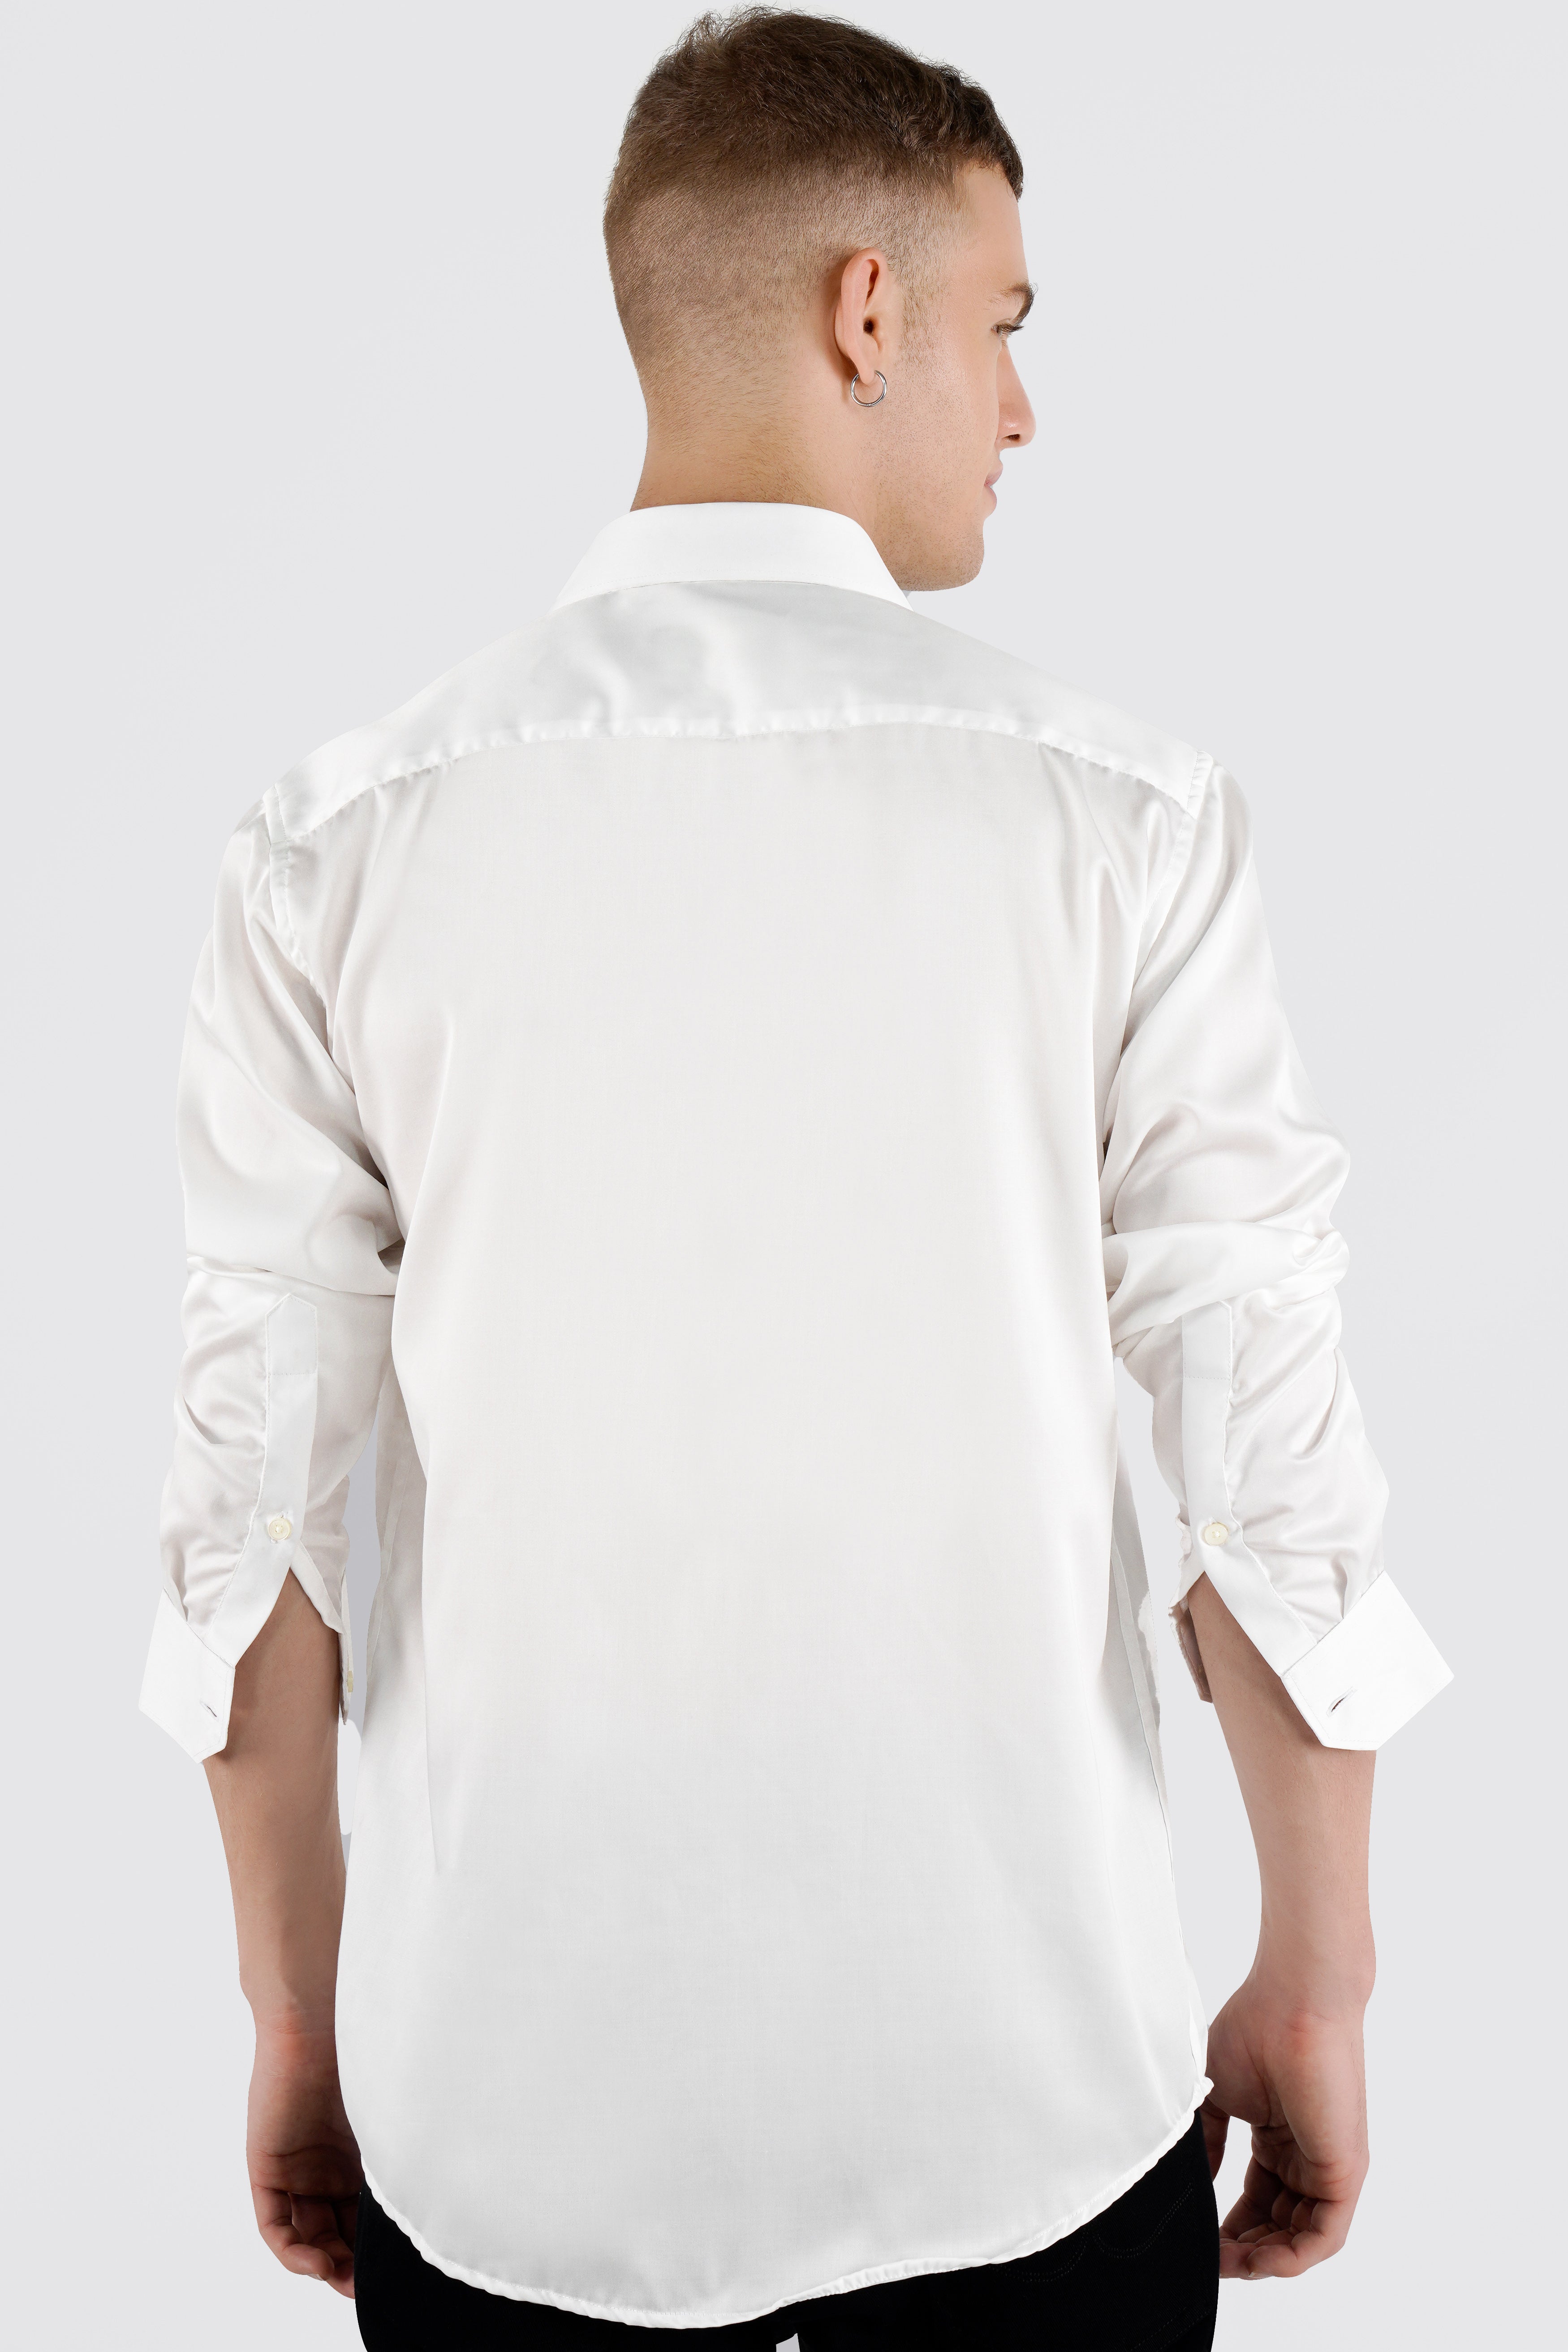 Bright White Funky Printed Super Soft Premium Cotton Designer Shirt